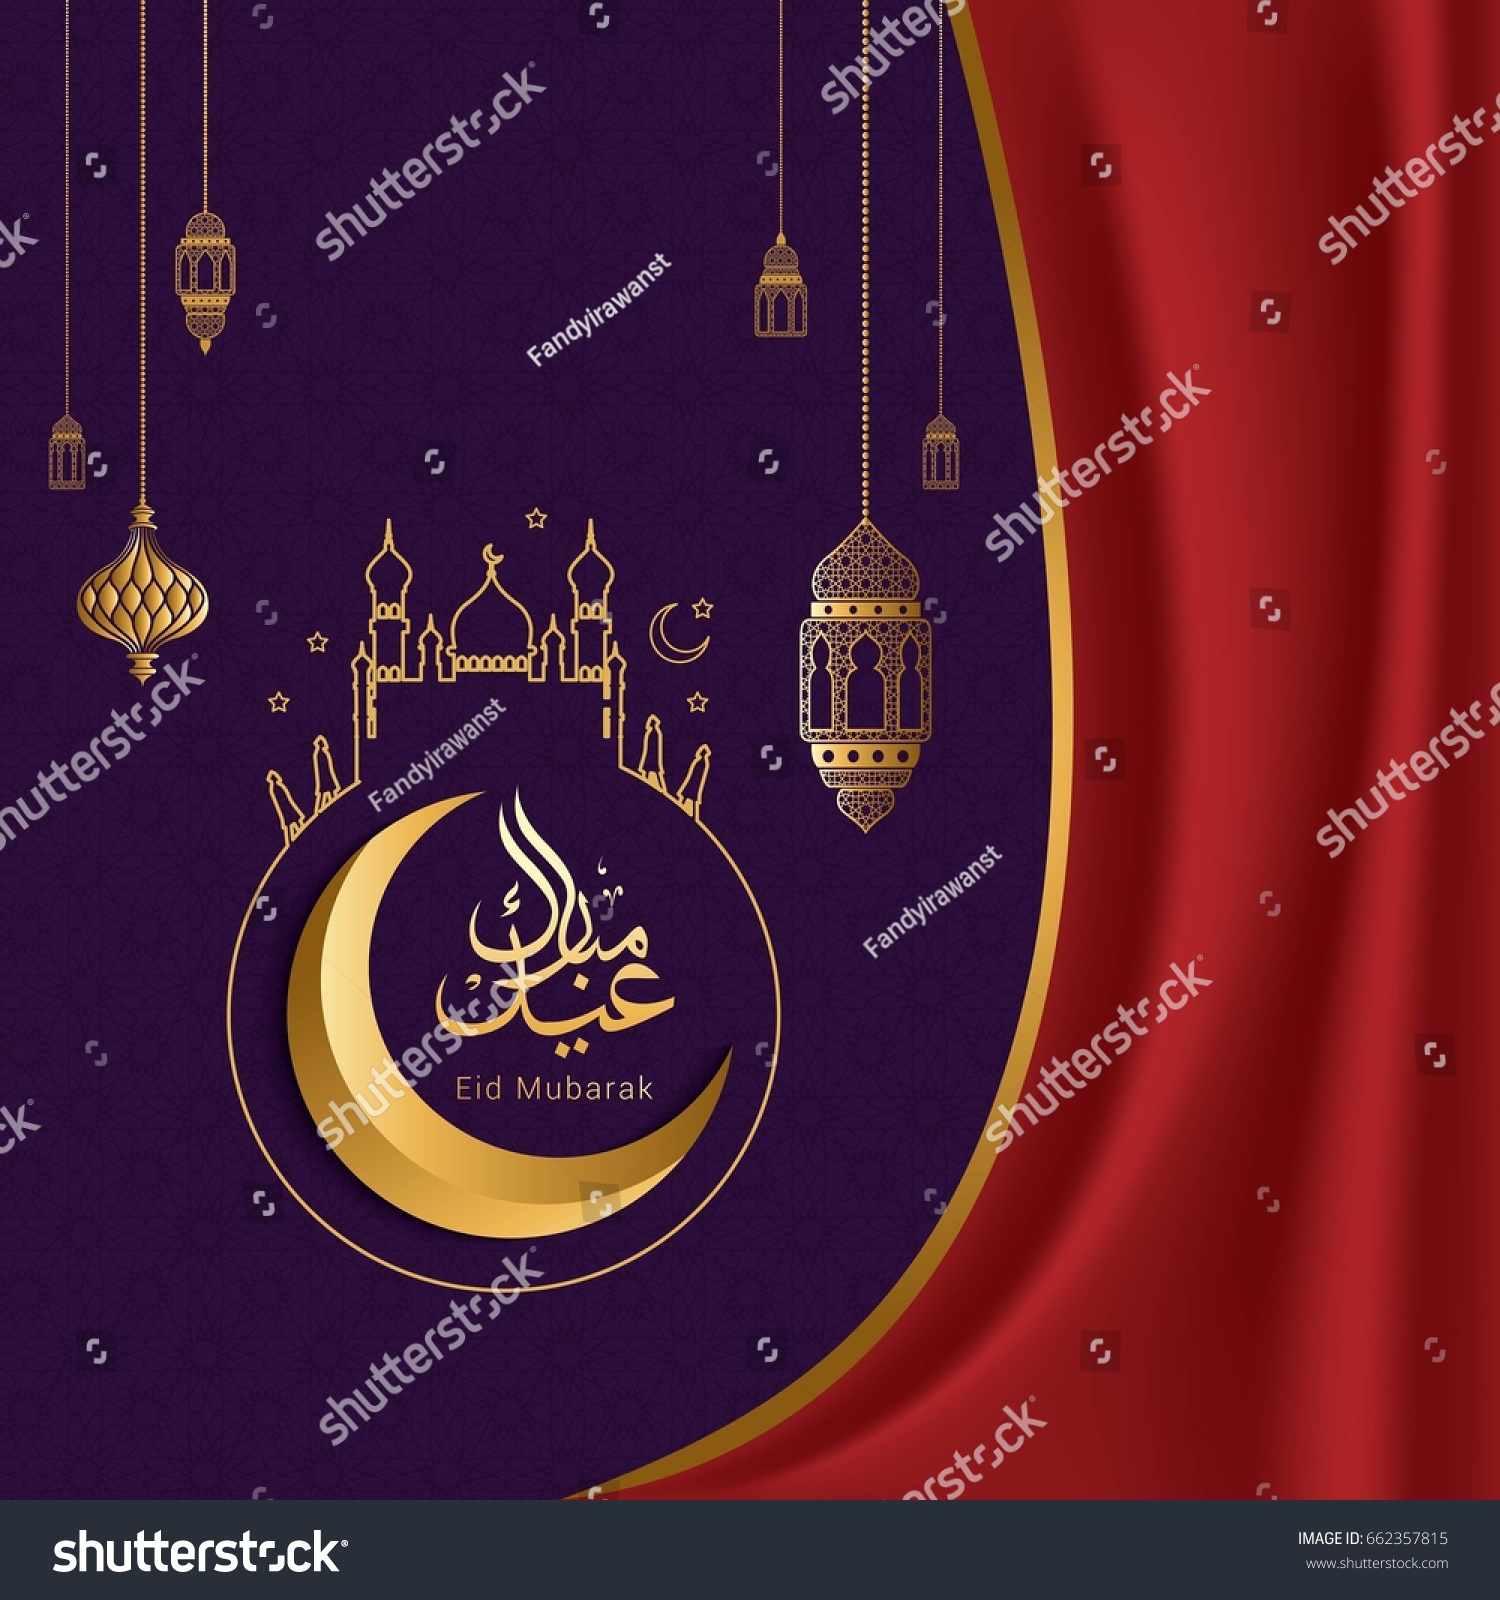 Eid Mubarak Design Background. Vector illustration for Greeting card, poster and banner #662357815